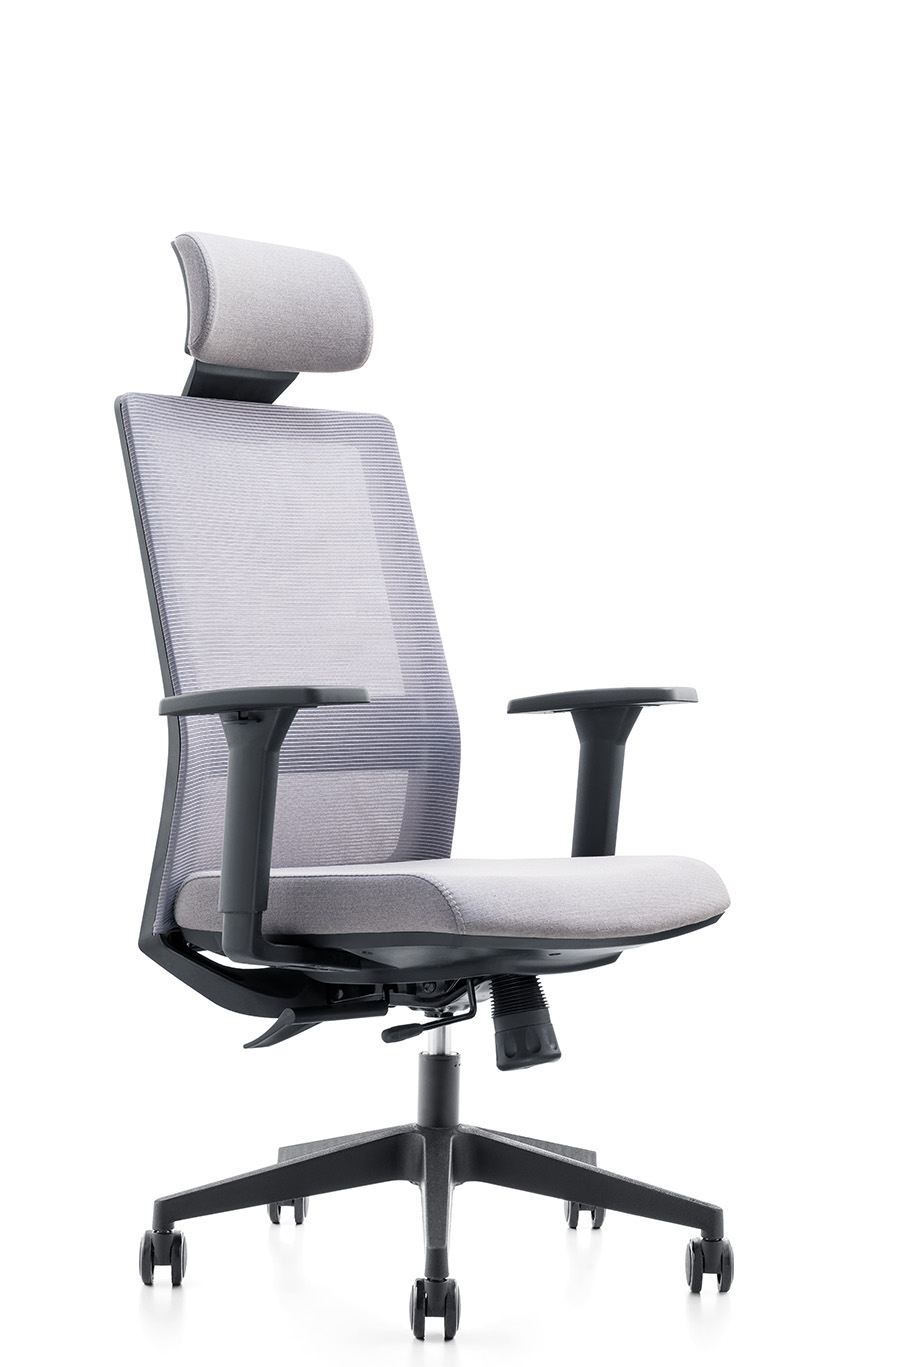 High Back Ergonomic Office Chair1